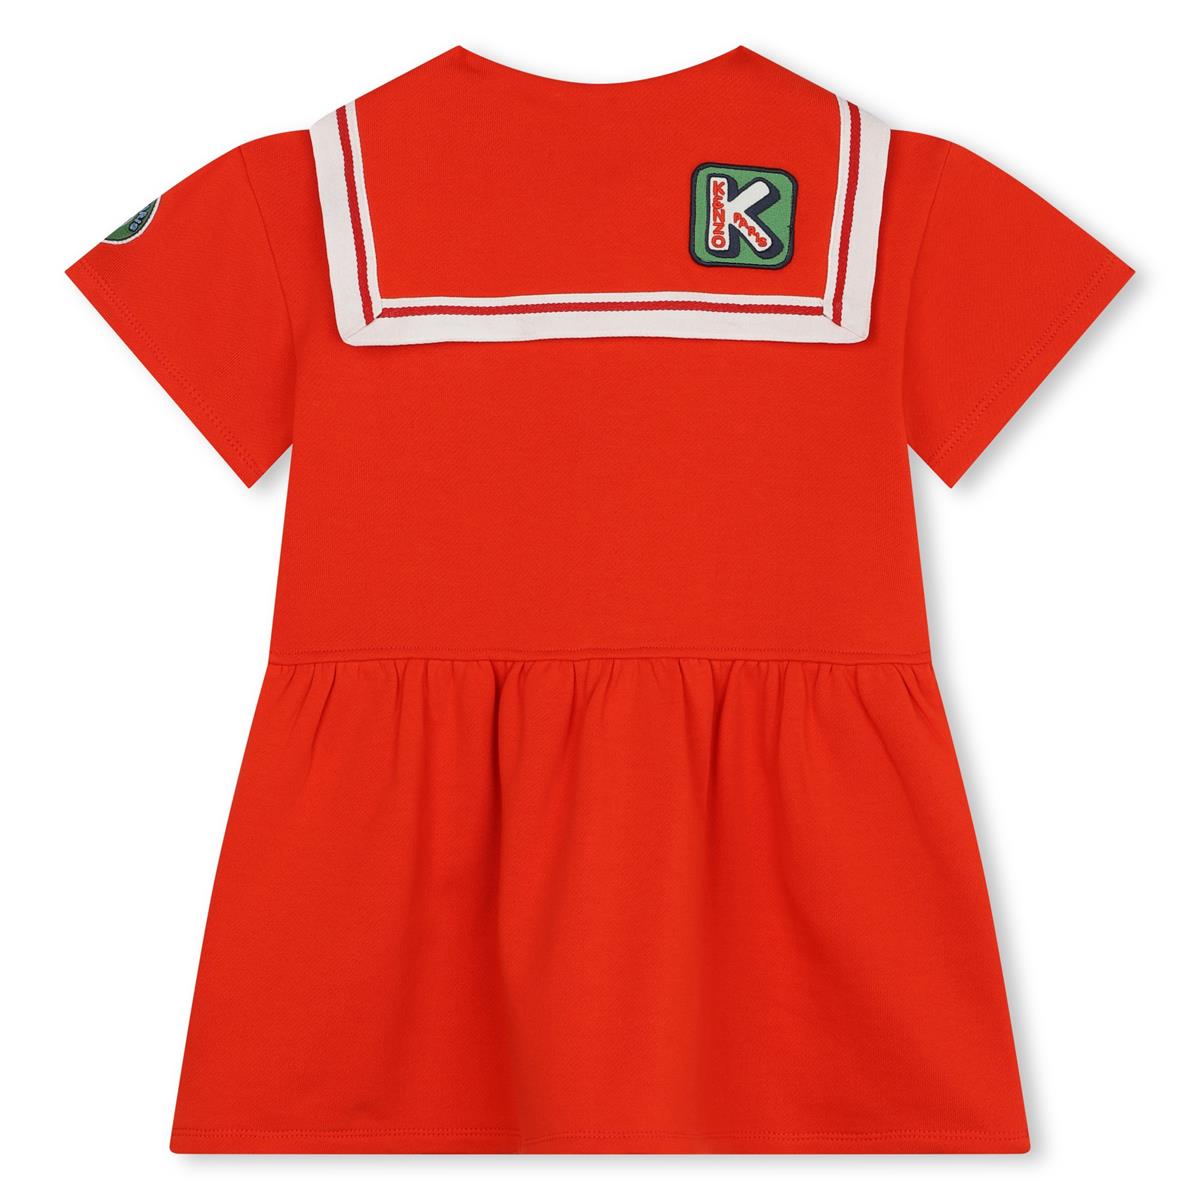 Girls Red Cotton Dress